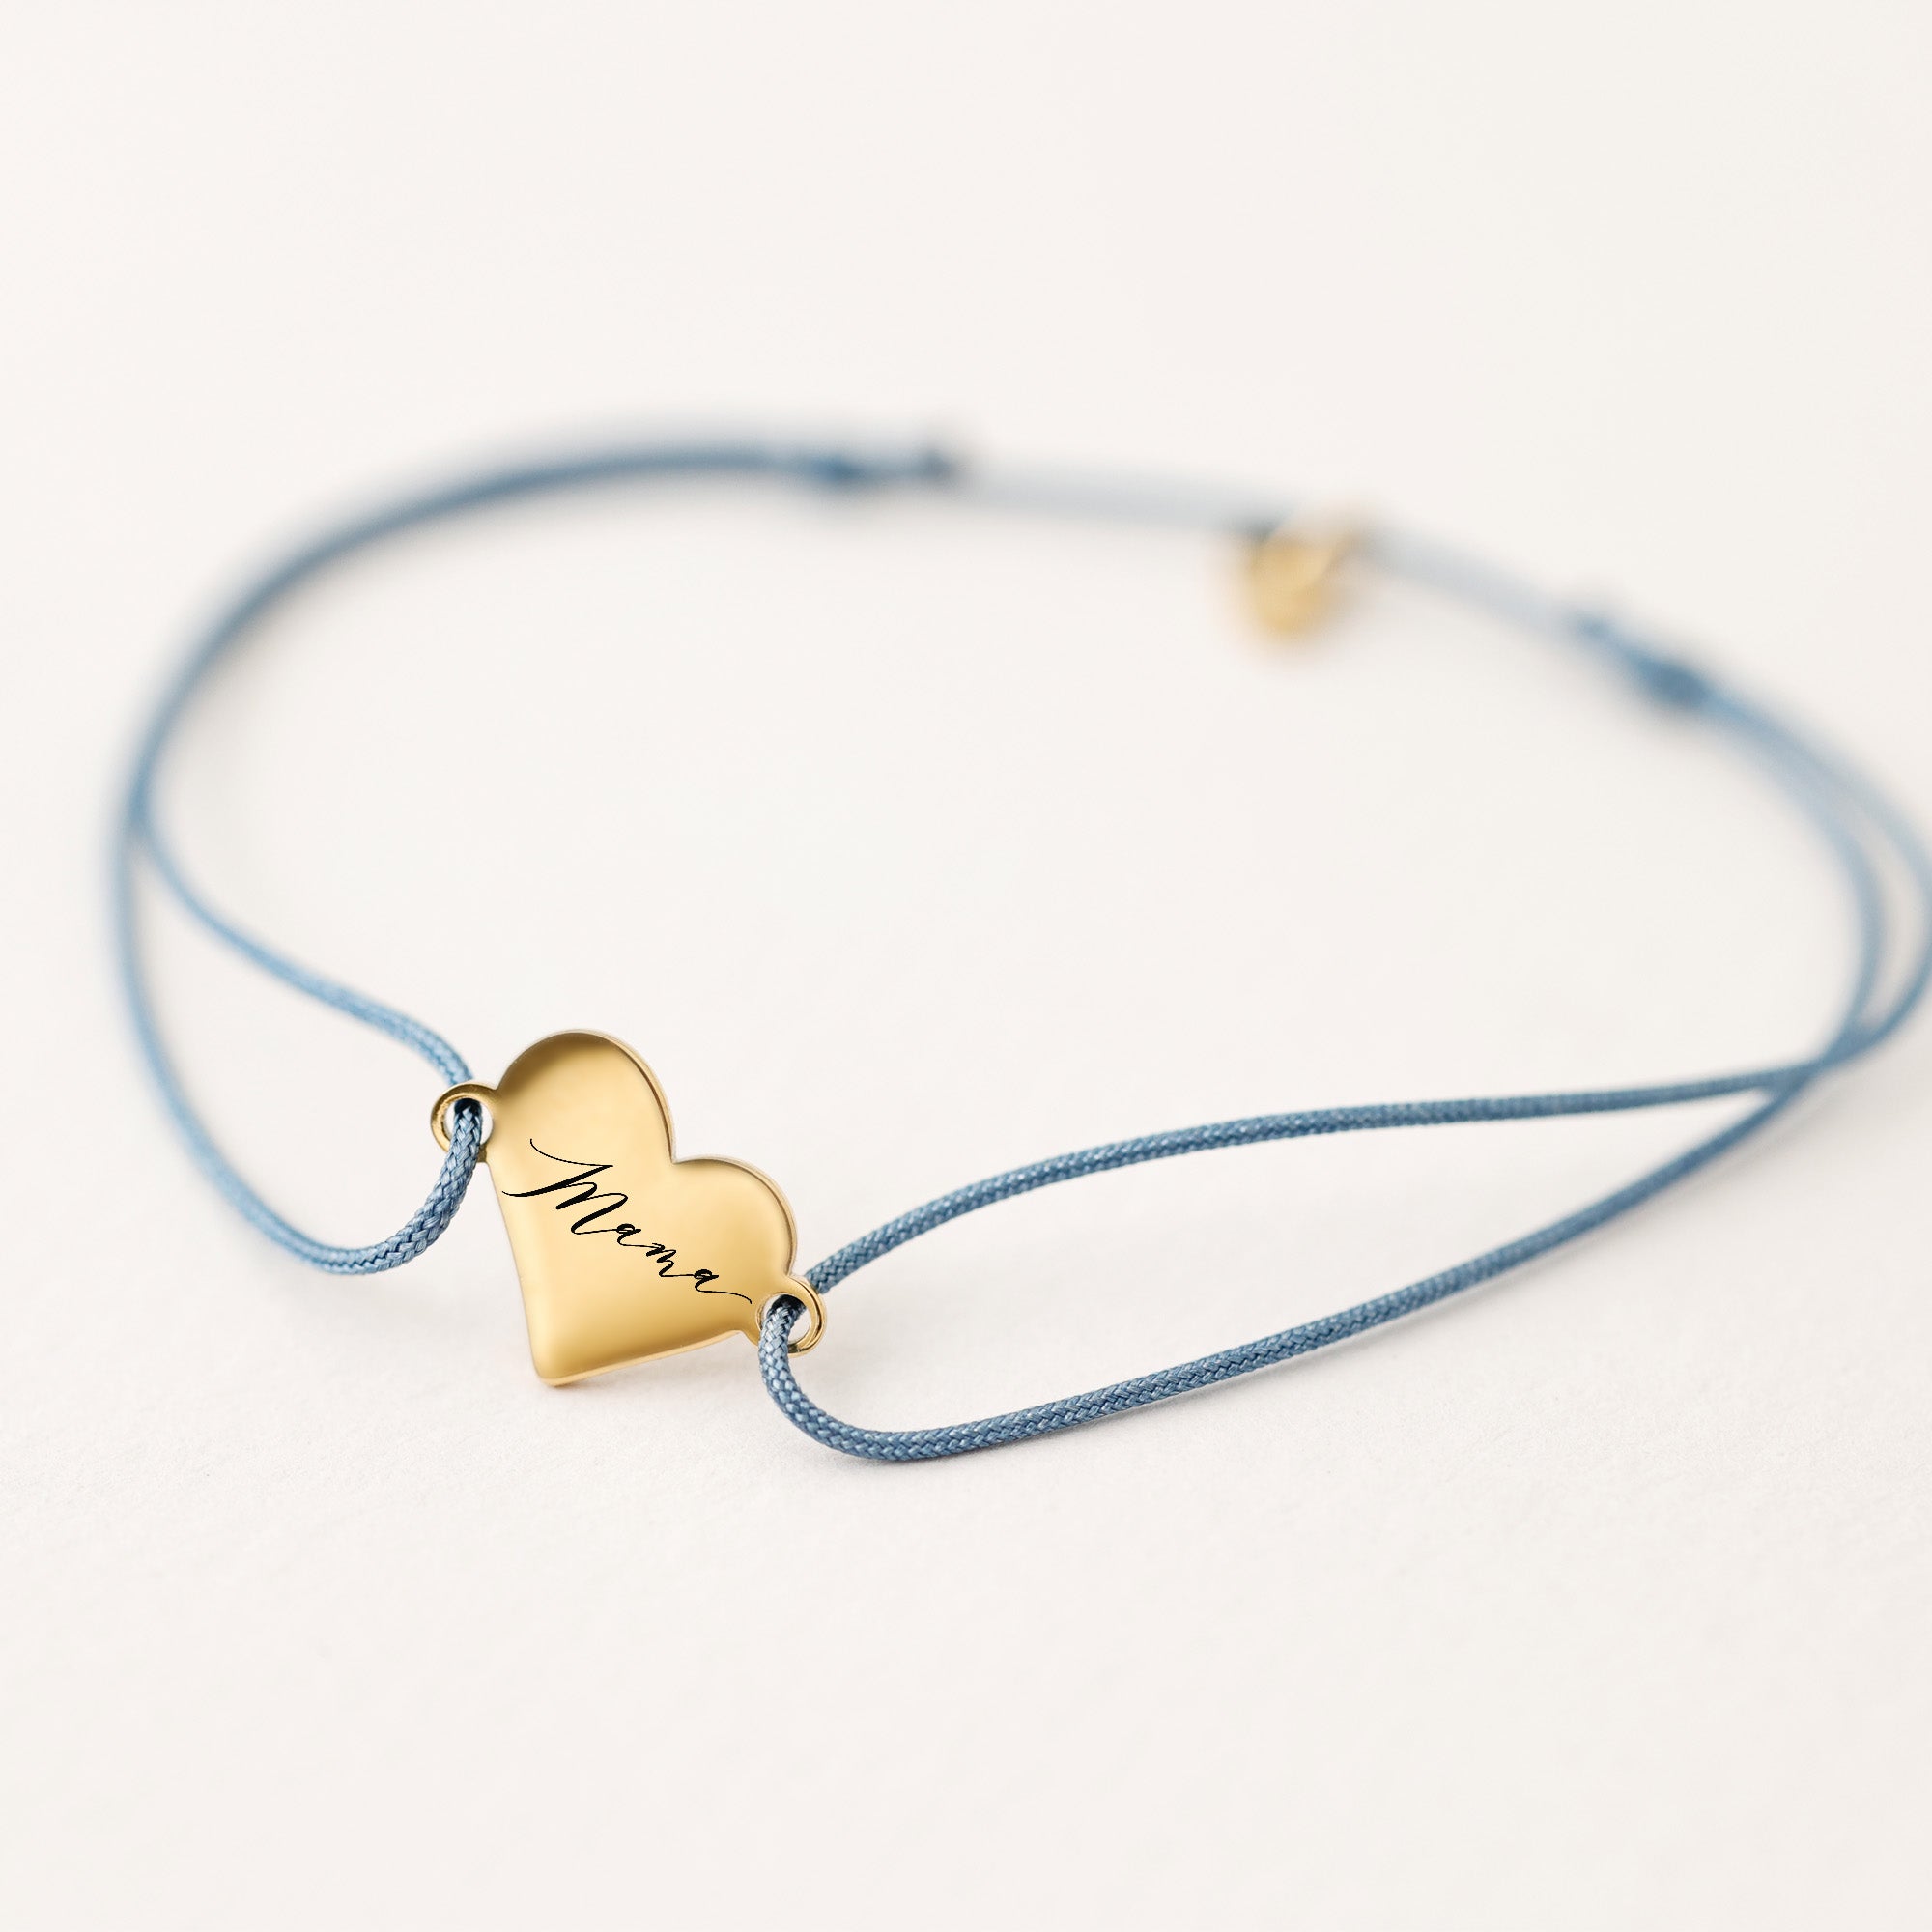 Personalisiertes Herz Armband - Wunschgravur - Kommunion - Konfirmation - Firmung - Muttertag Geschenk - Herz Armband - Mama Geschenk A222